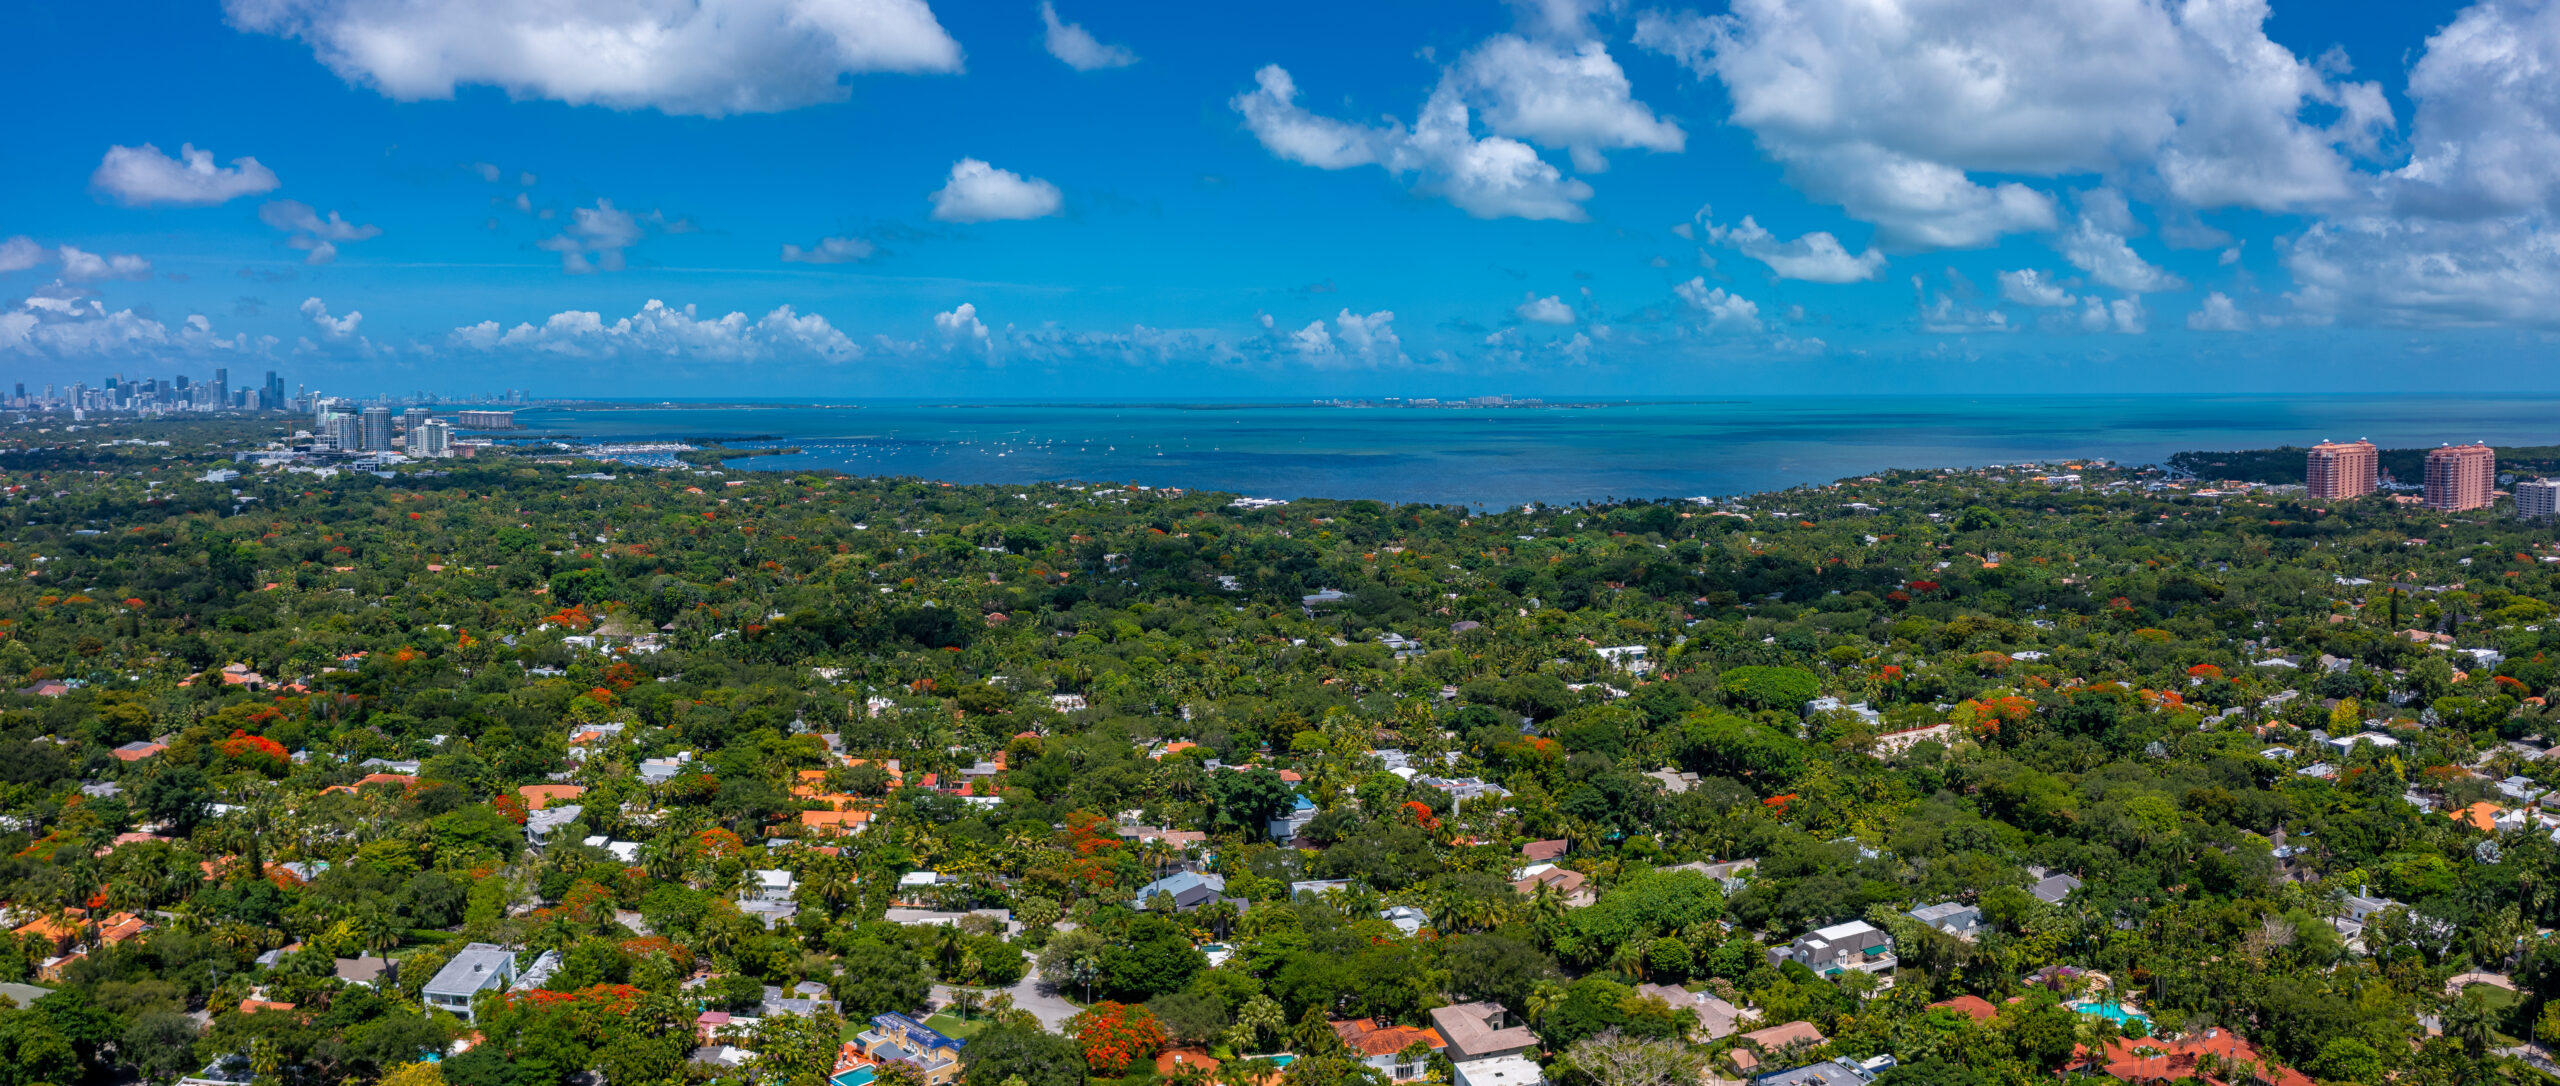 Coconut Grove Aerial panoramic photo